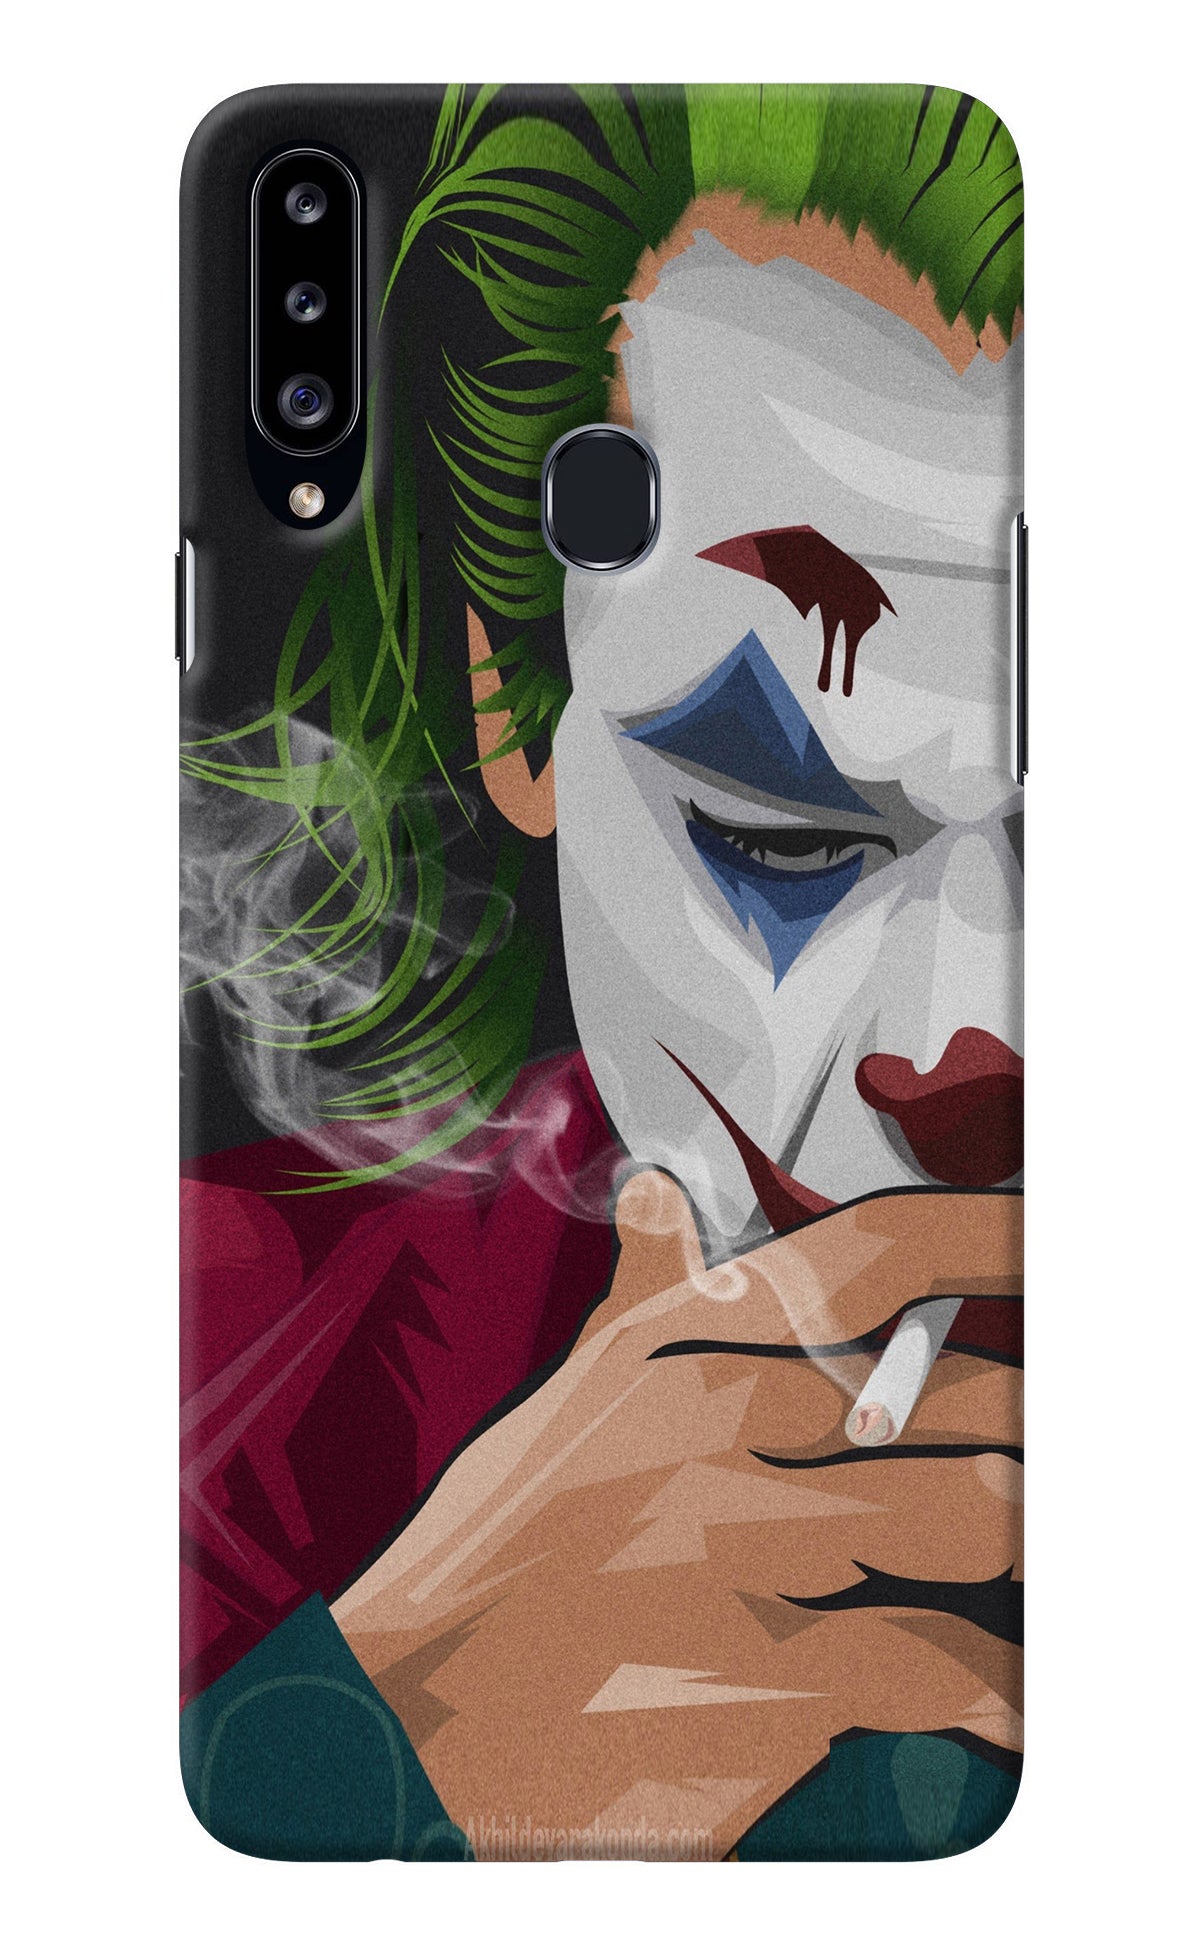 Joker Smoking Samsung A20s Back Cover